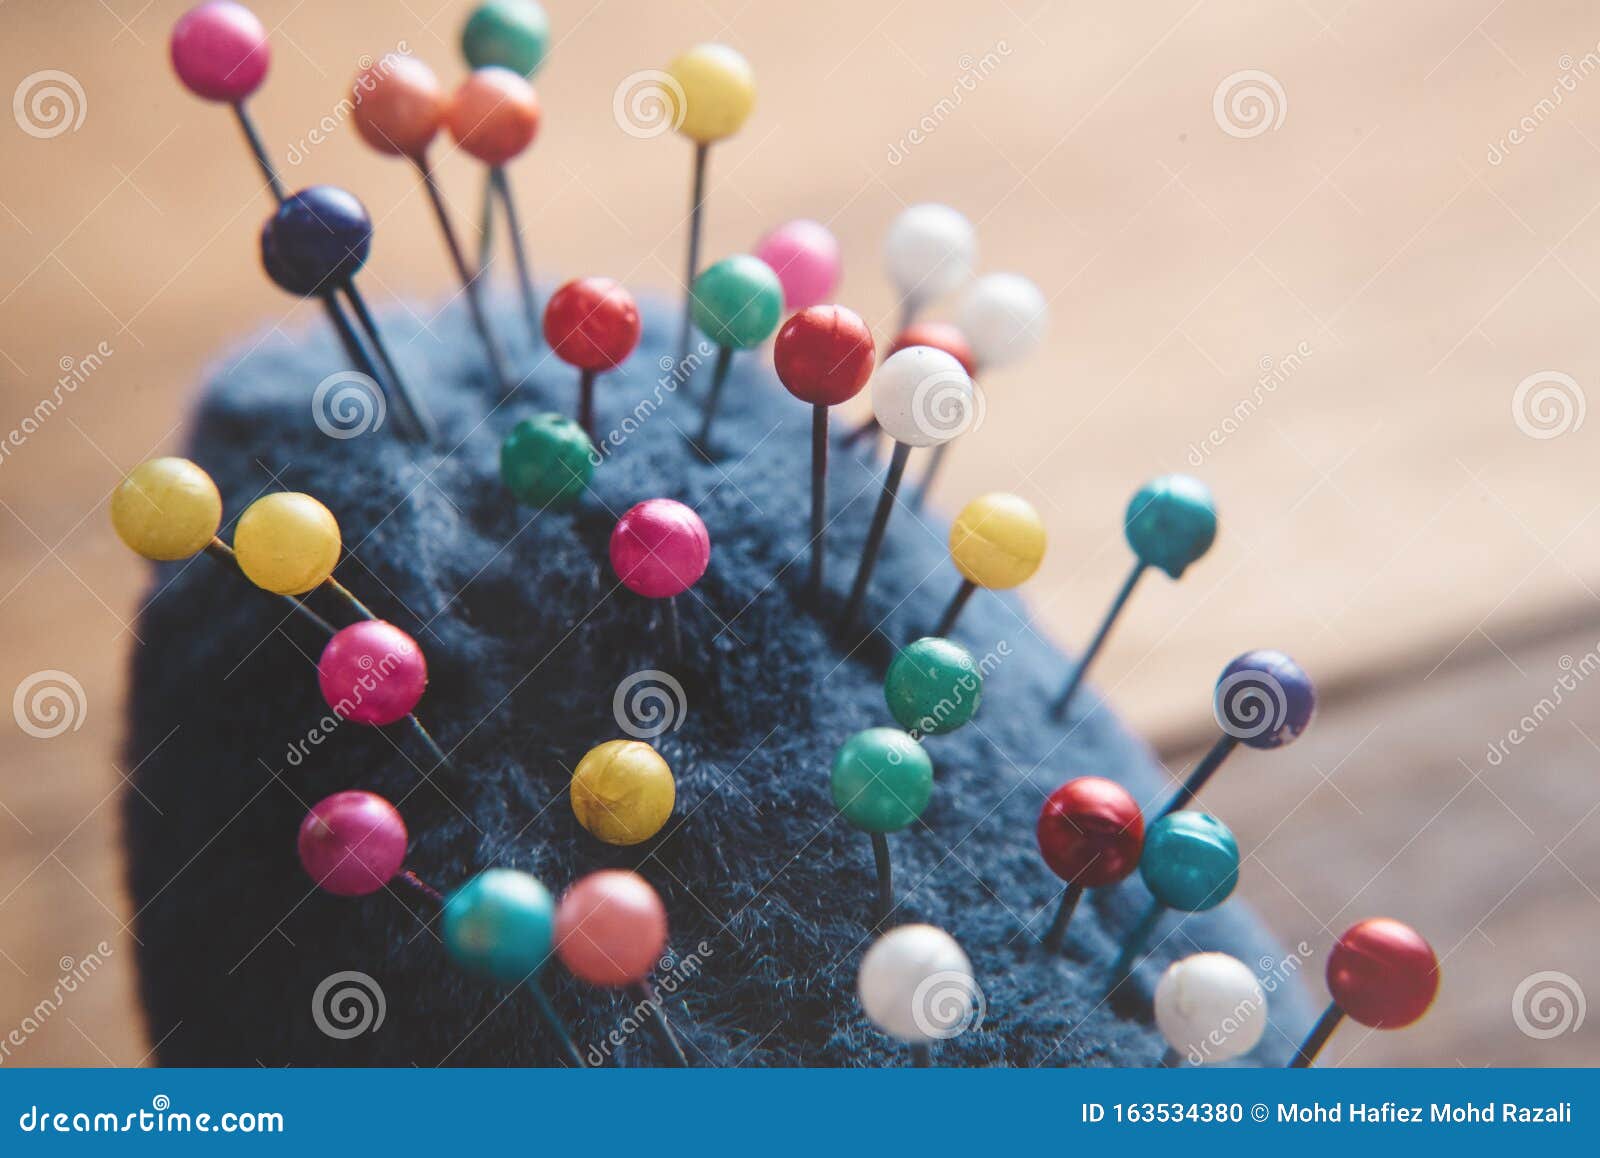 Clodeup of a Multicolored Pin. Pins & Needles Closeup Stock Photo ...